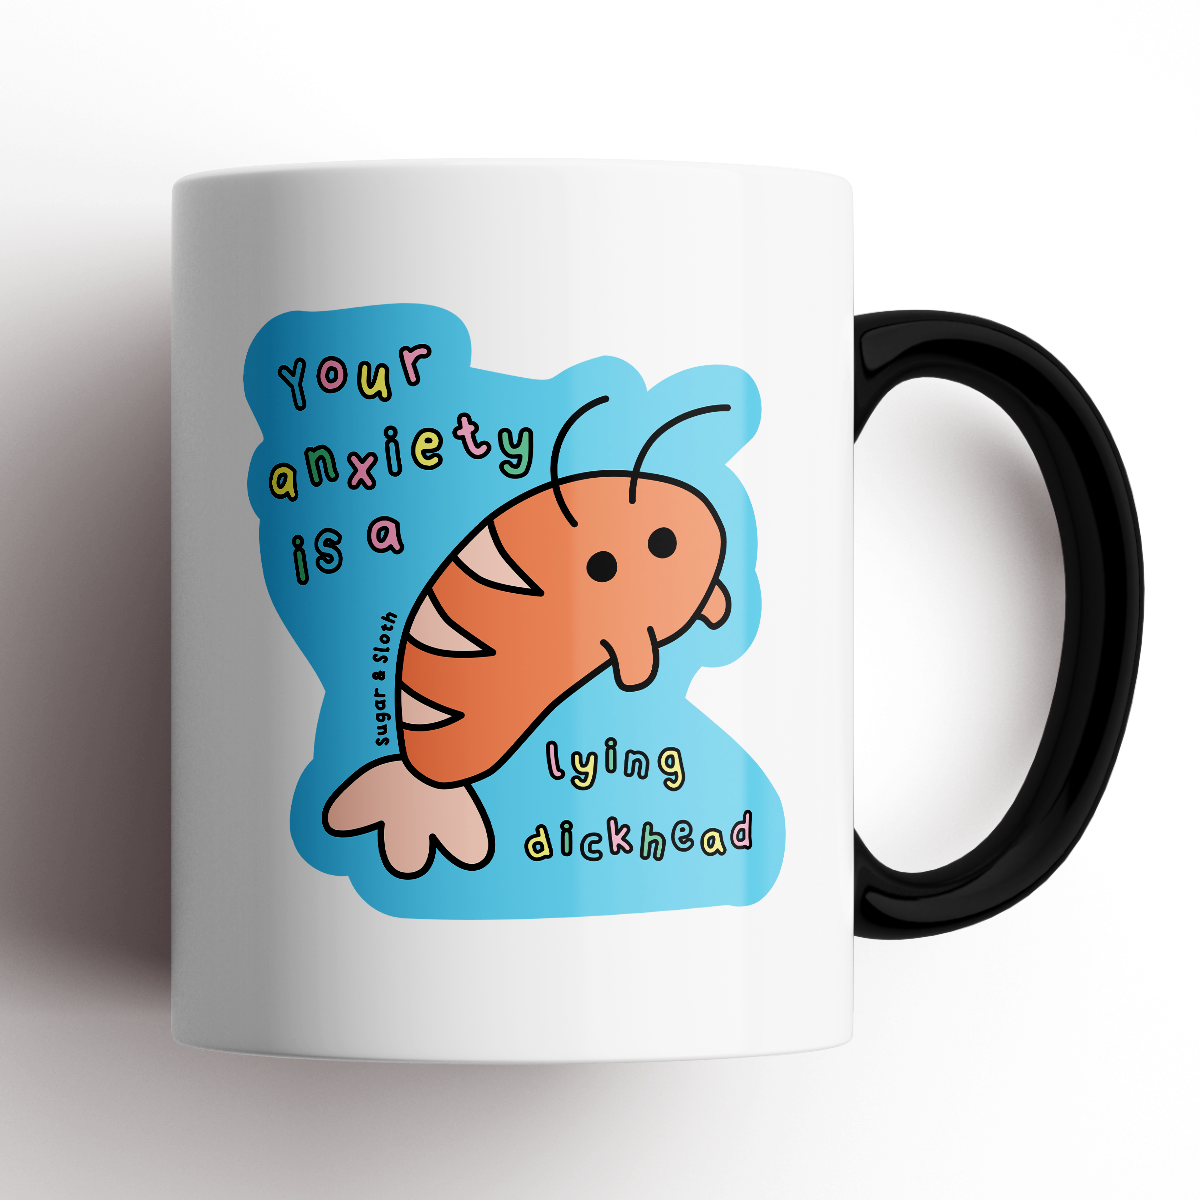 Your Anxiety Is a Lying Dickhead Shrimp of Self-Care Mug